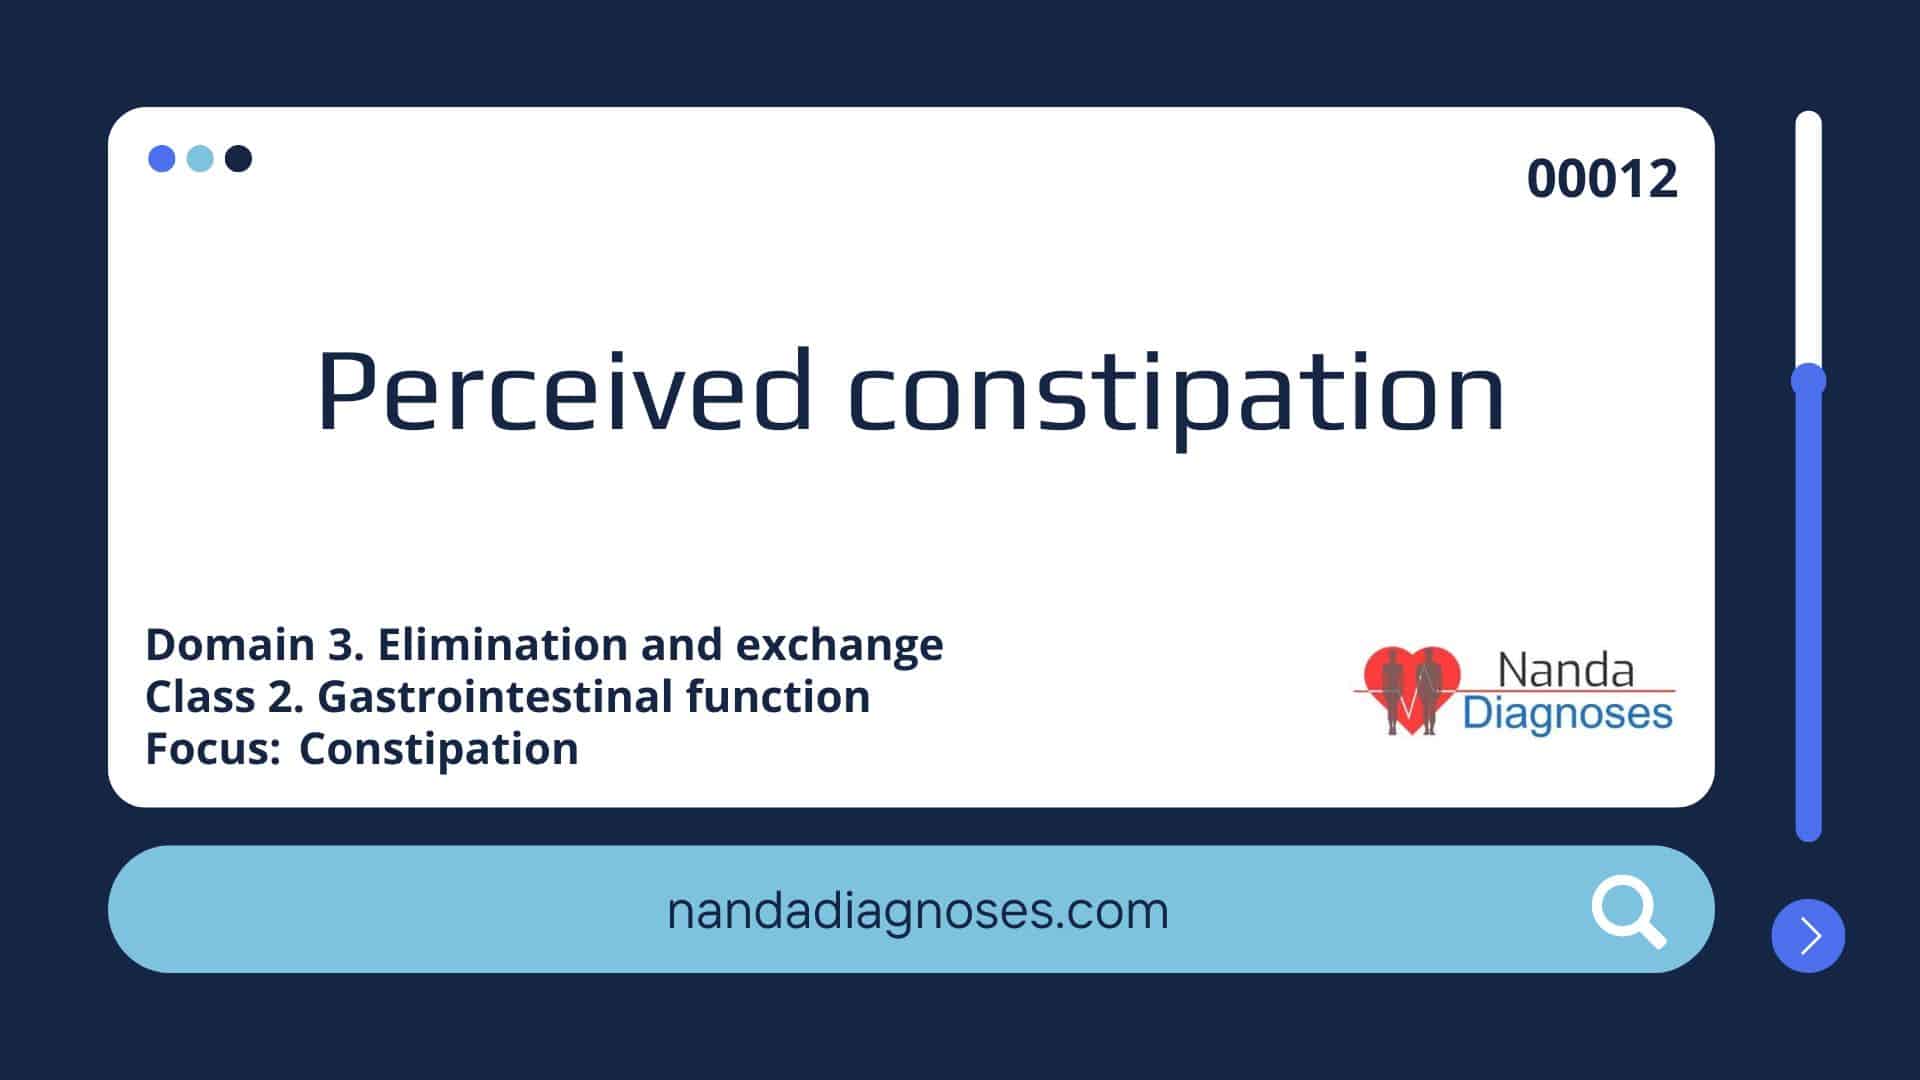 Nursing diagnosis Perceived constipation